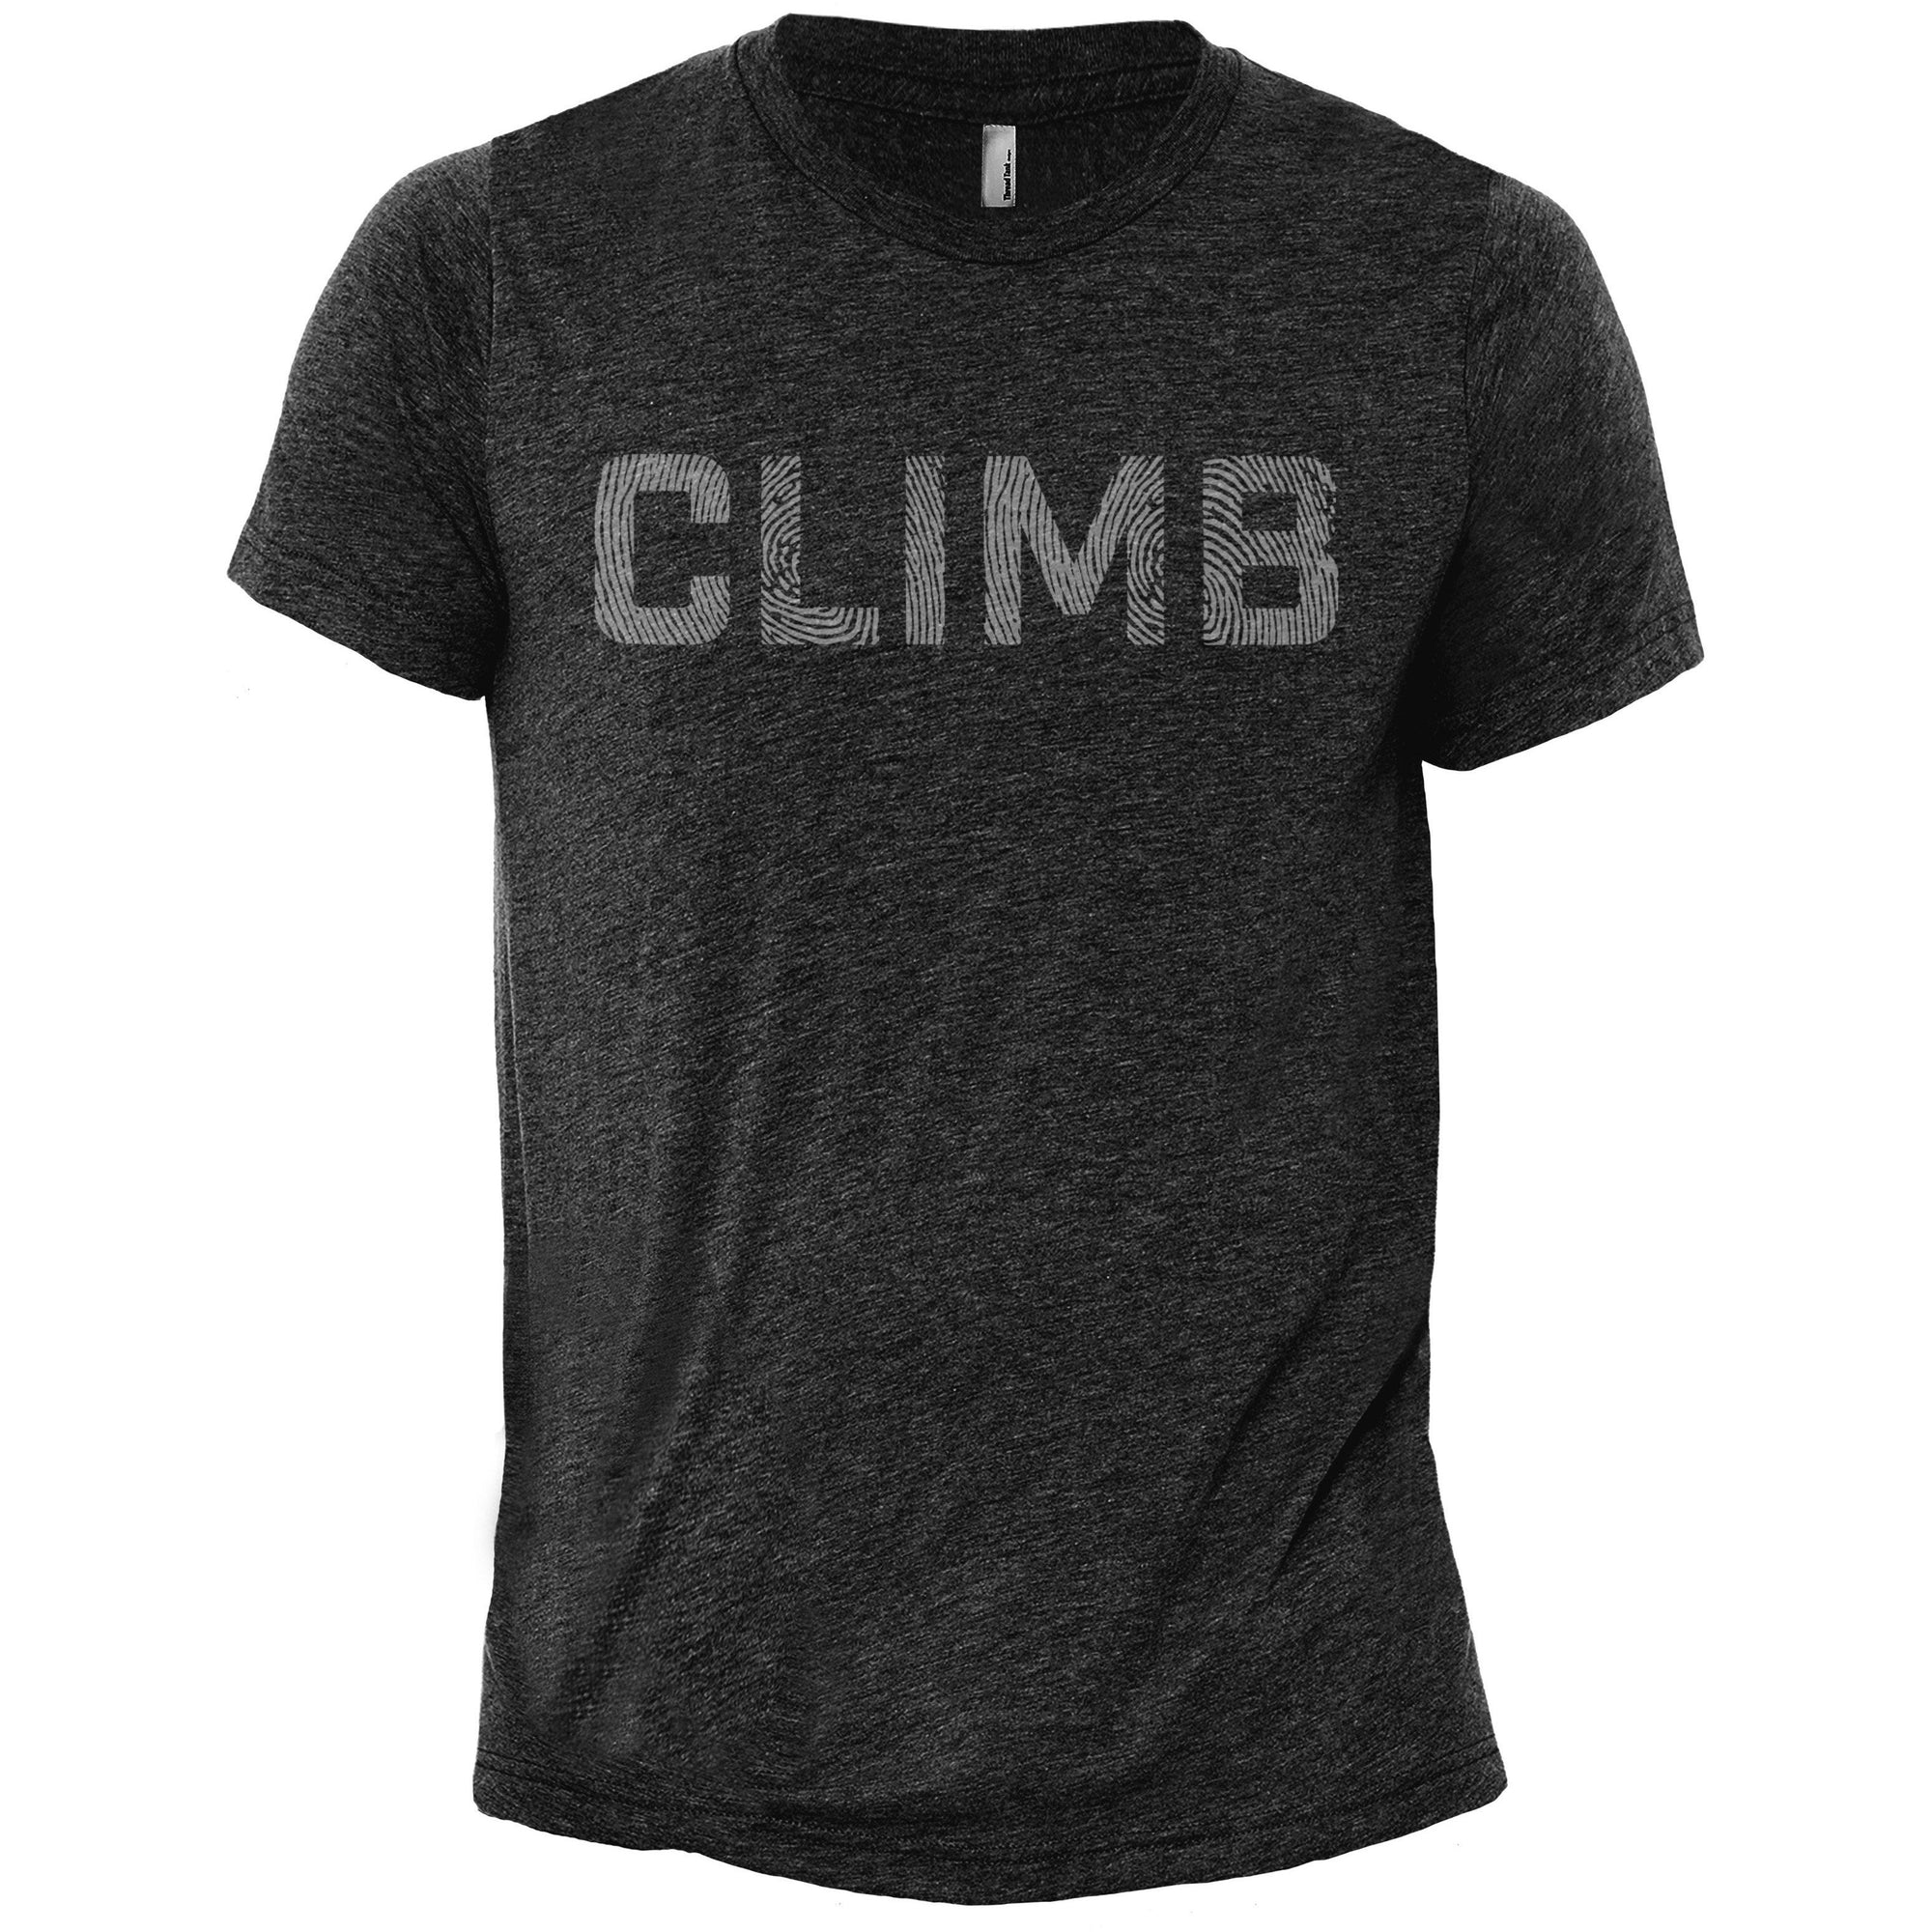 Climb Charcoal Printed Graphic Men's Crew T-Shirt Tee